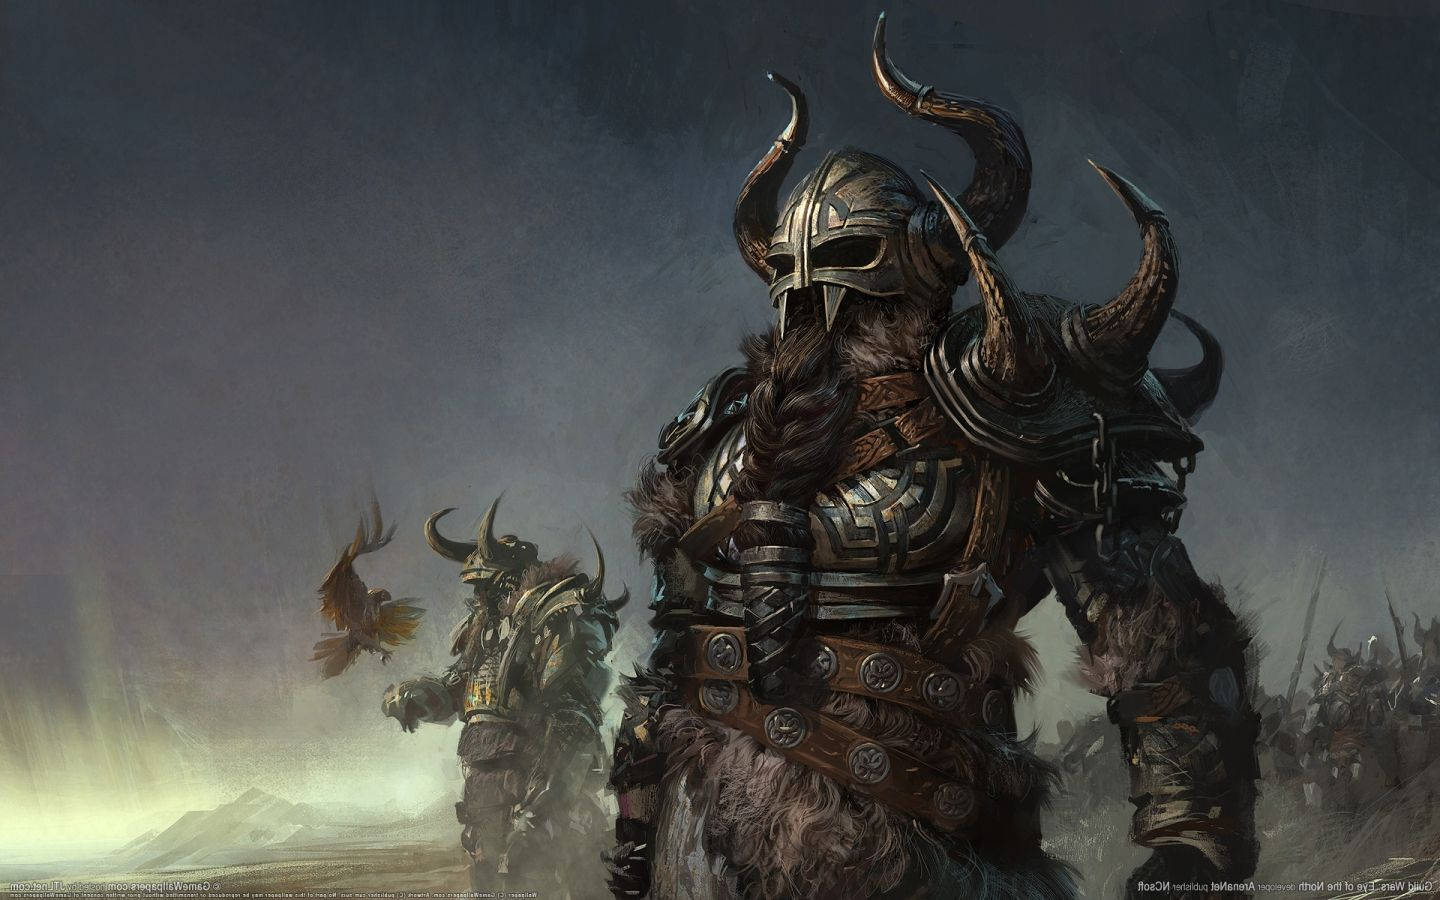 Armor-clad Viking Warriors Background